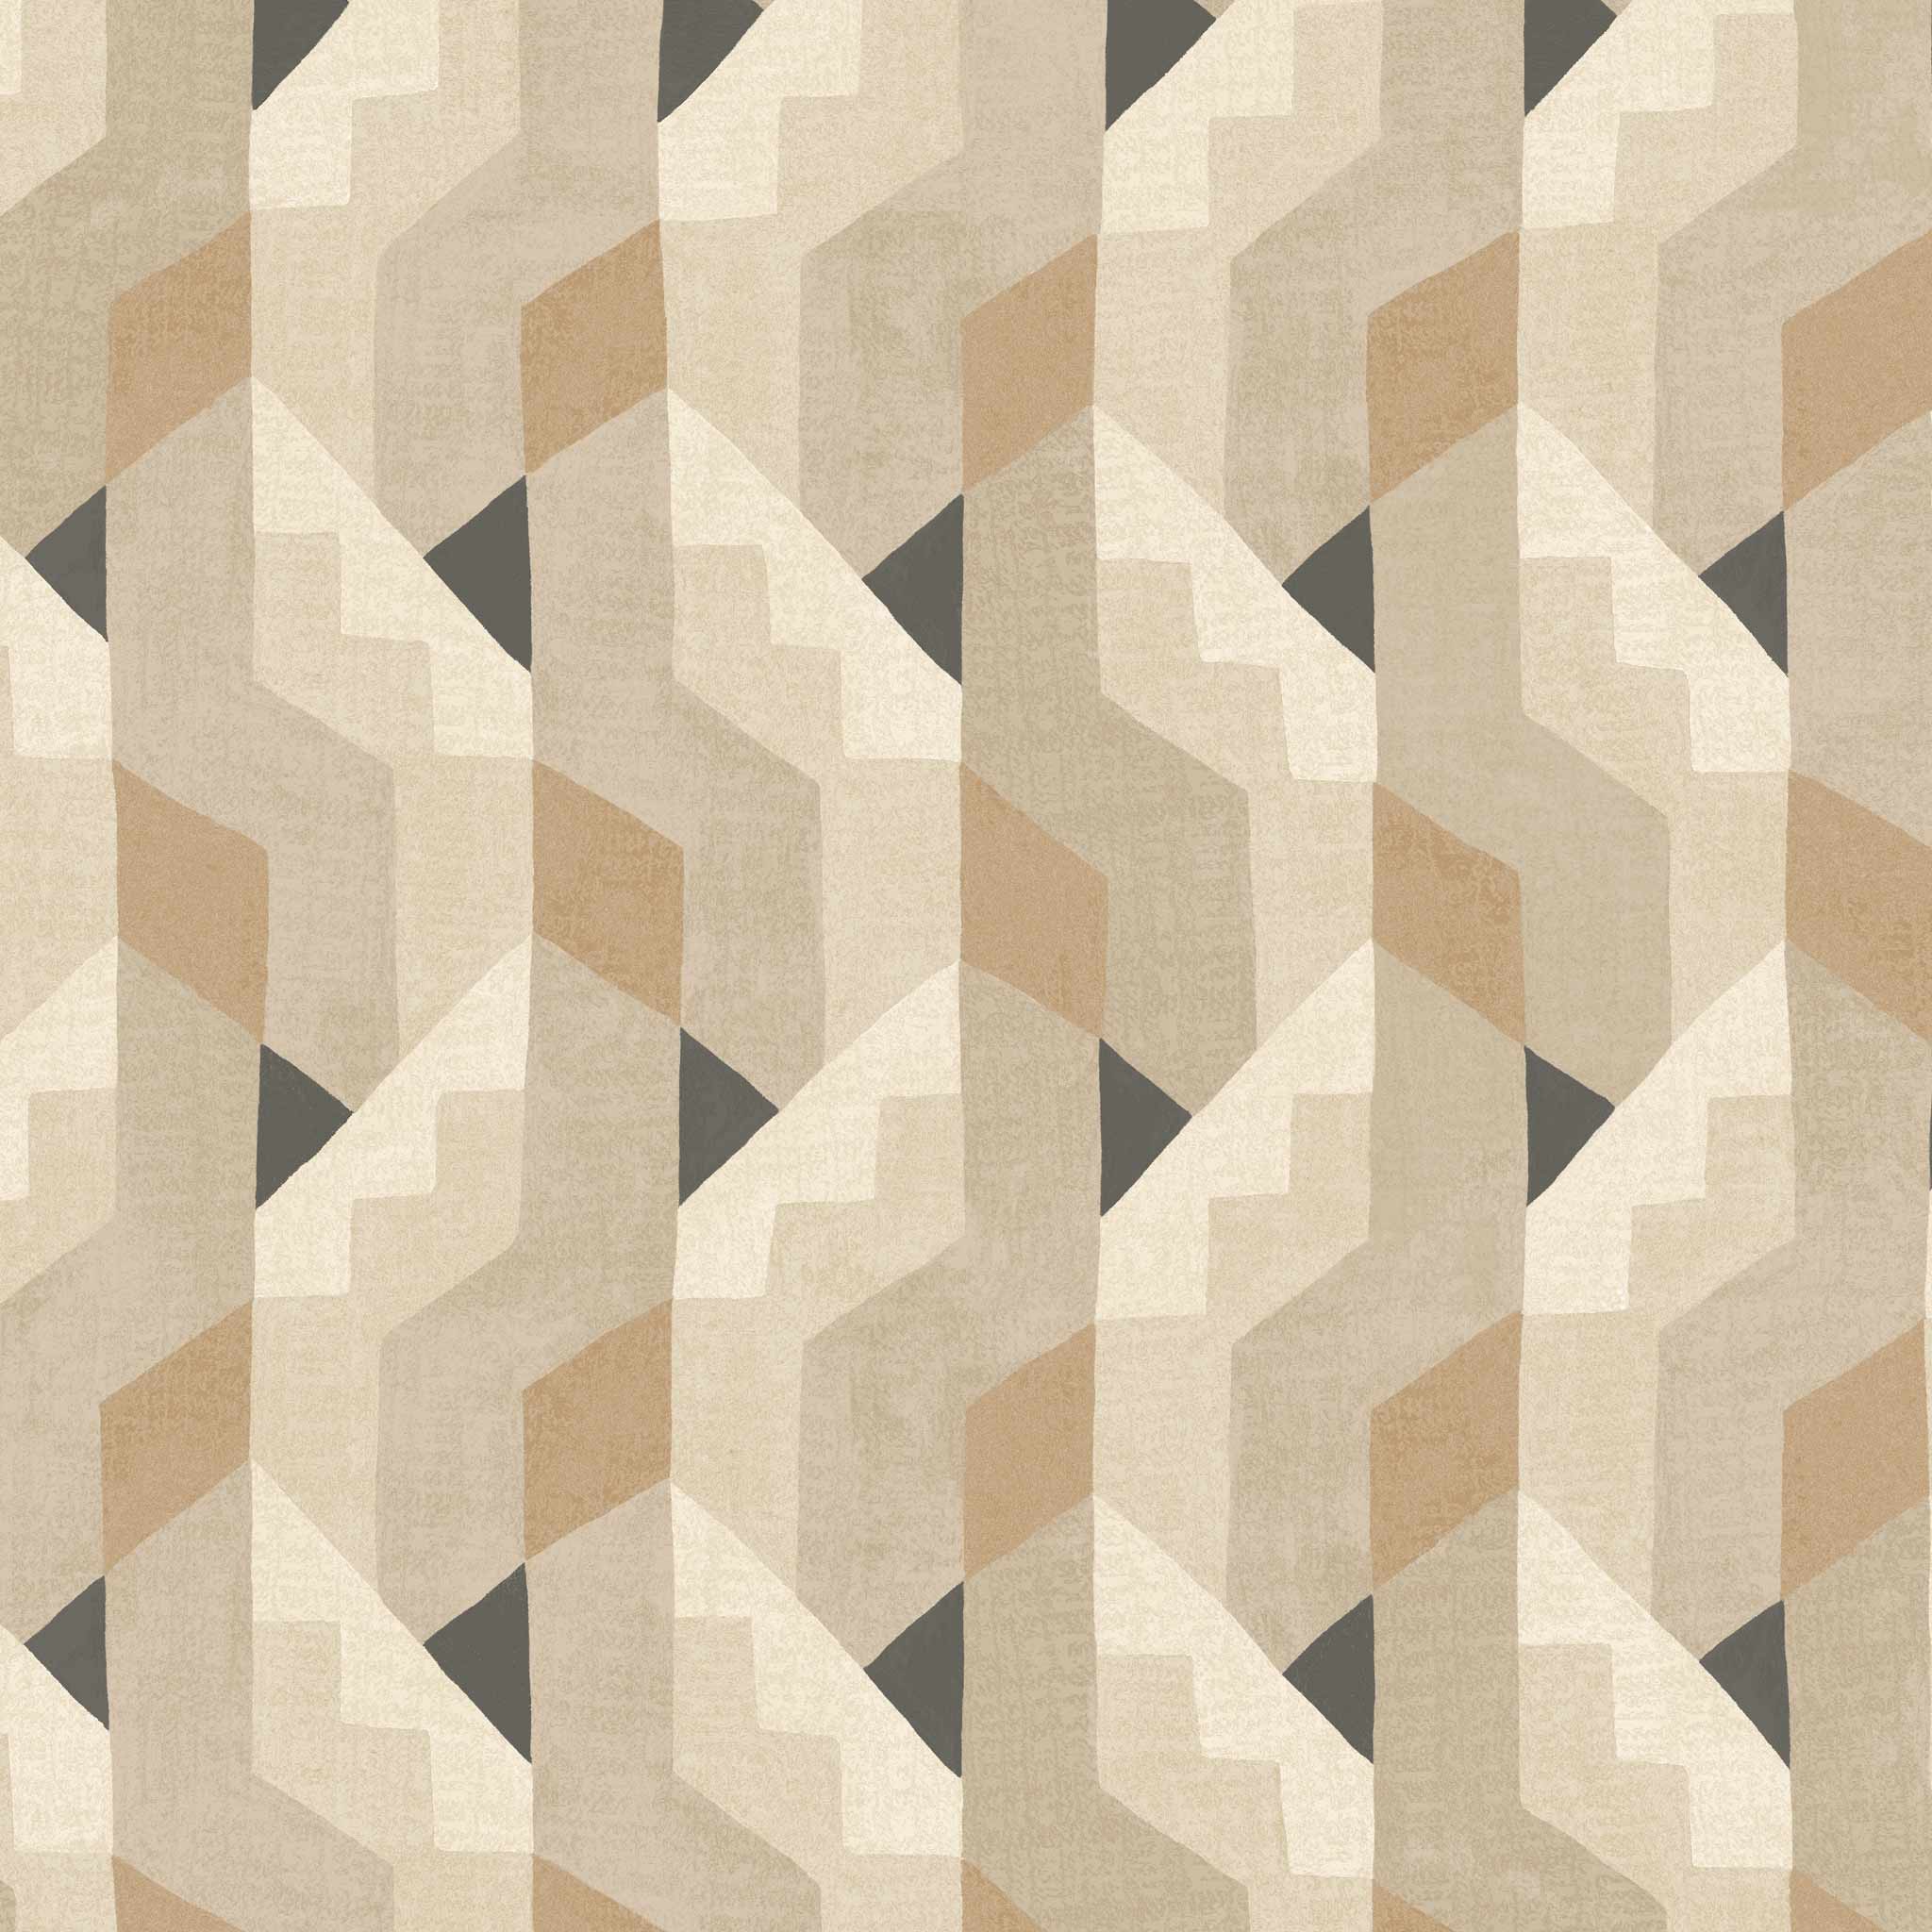 Habita wallpaper design -  Gio grasscloth pattern in Natural